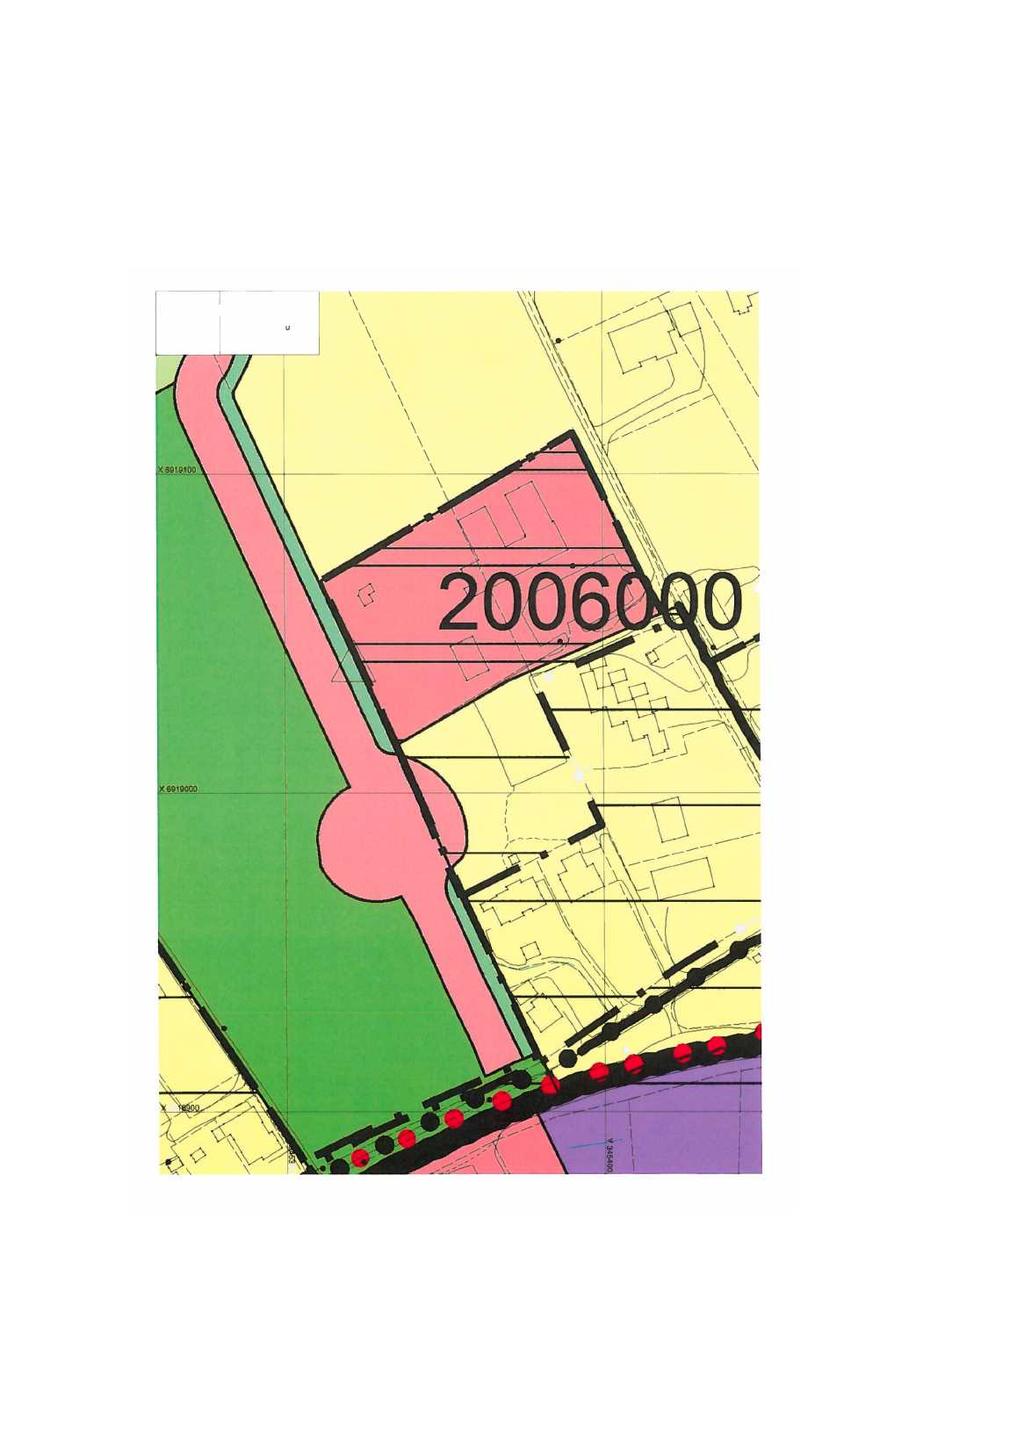 Kommuneplan/ kommunedelplan: I kommuneplanens arealdel 2012-2024 er området